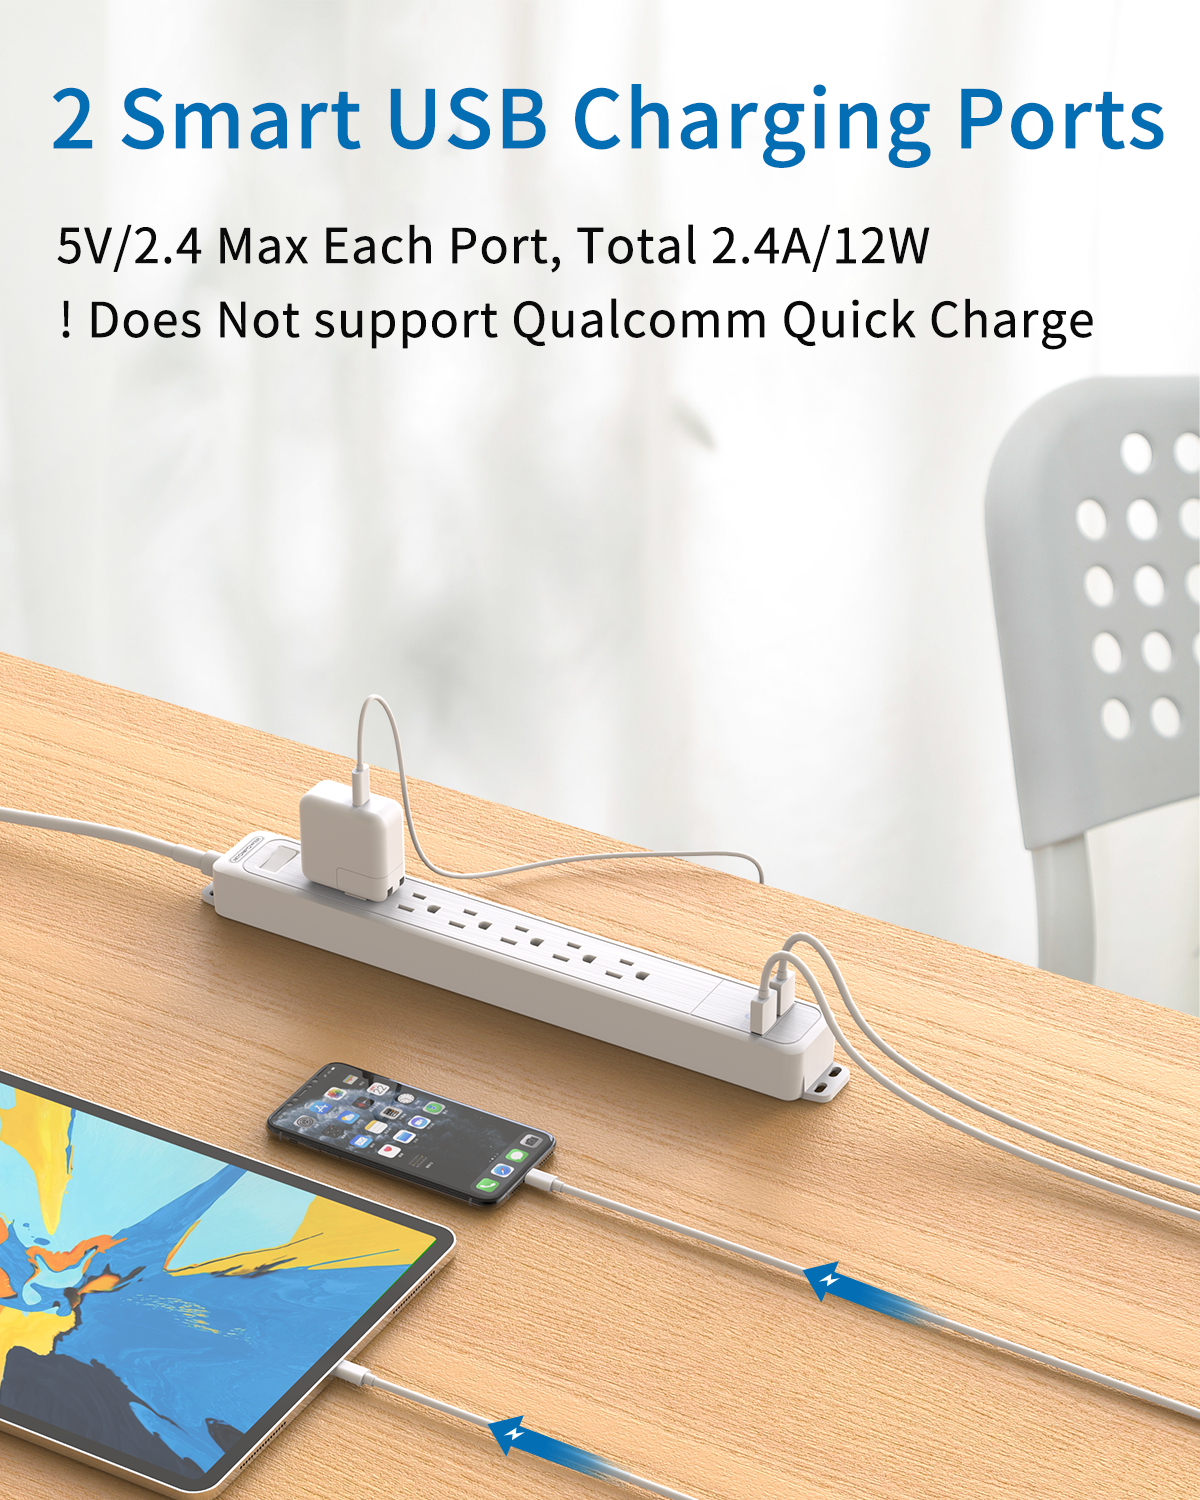 Ntonpower 1080J Surge Basic Power Strip 6 Outlets 2 USB